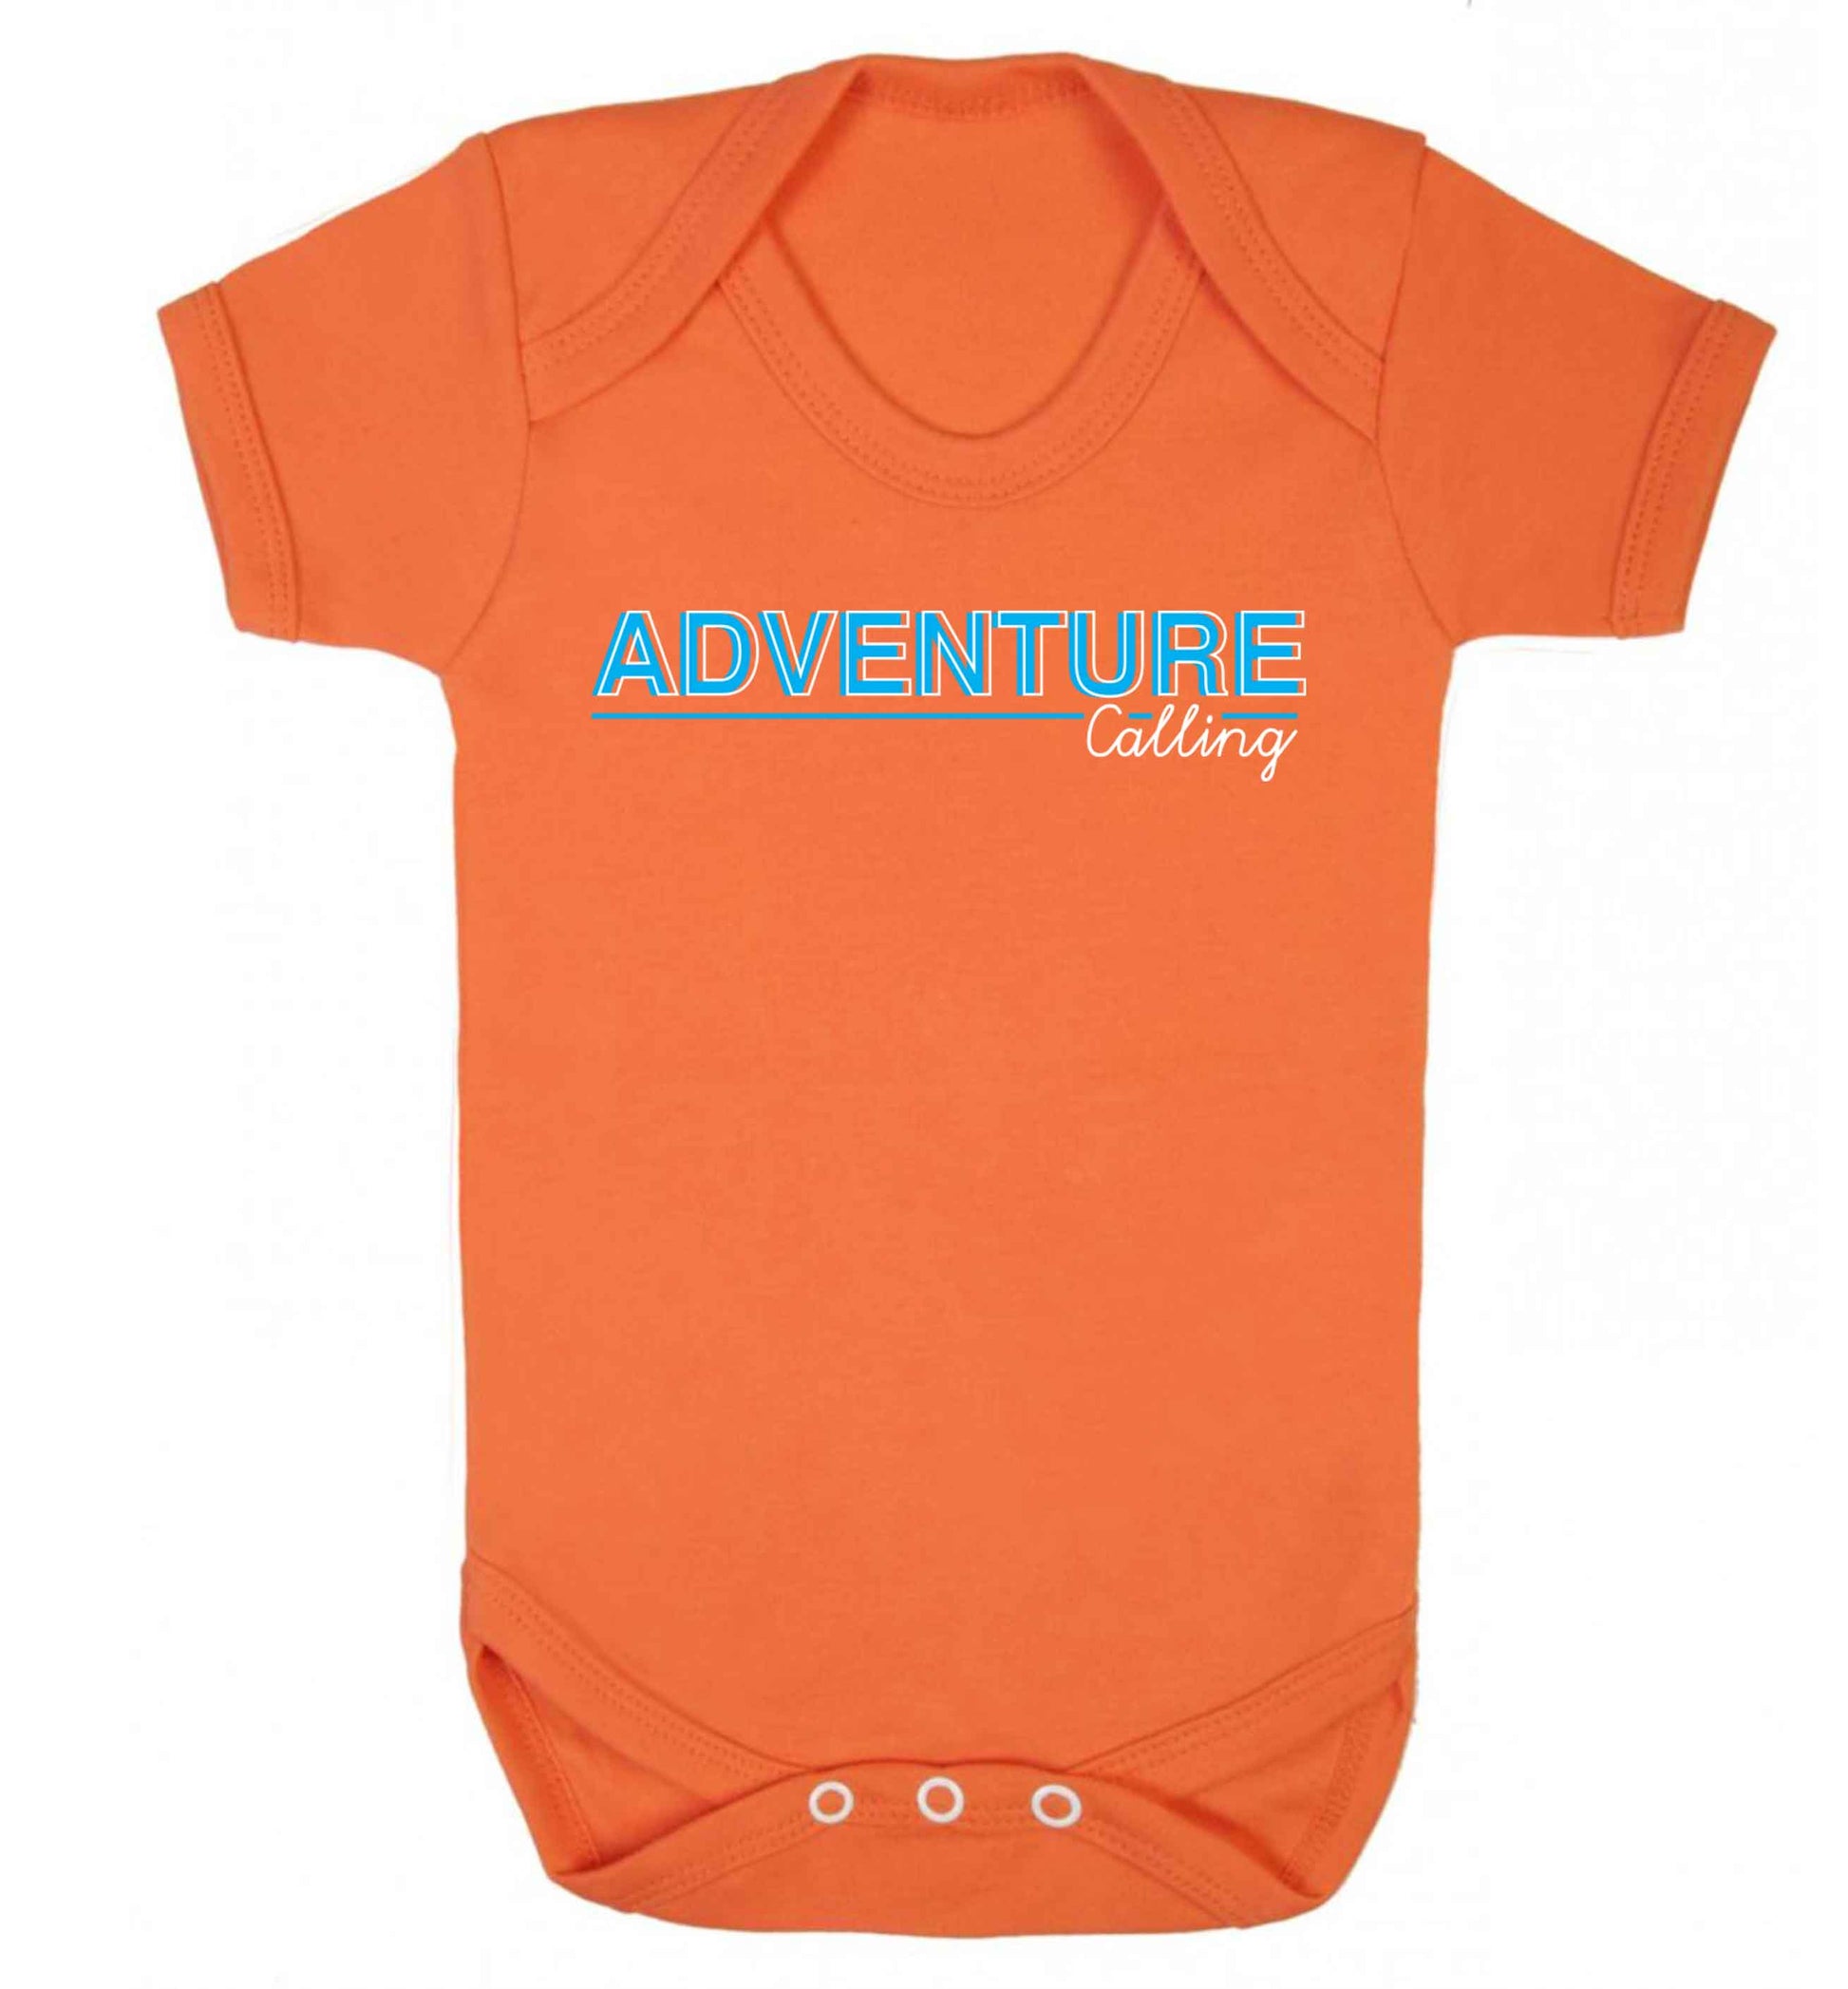 Adventure calling Baby Vest orange 18-24 months